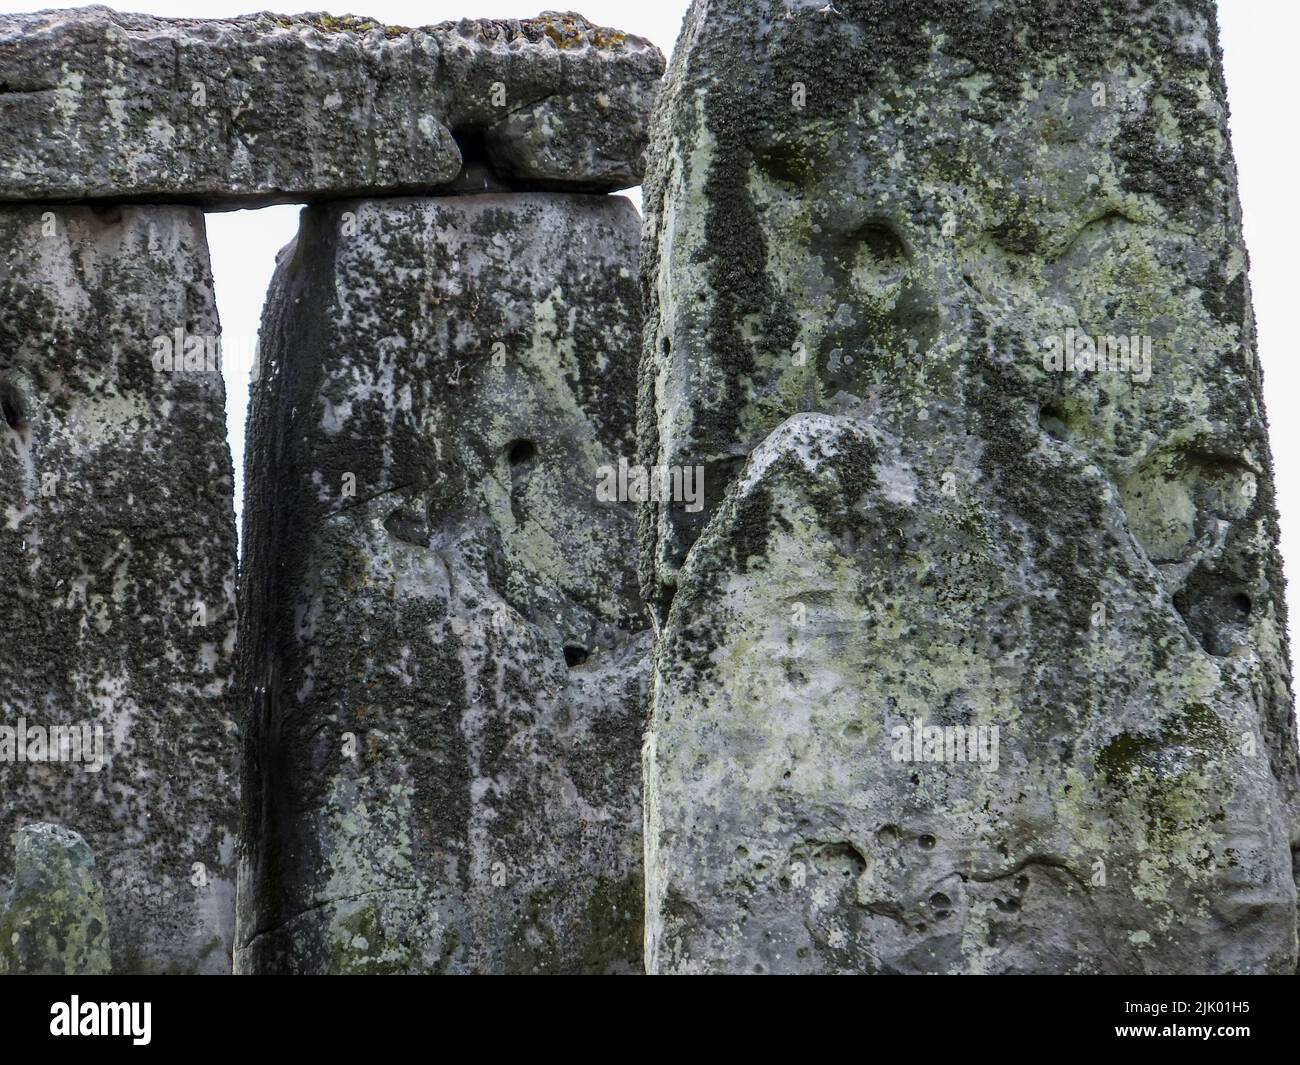 The stones of the ancient Stonehenge prehistoric monument near Amesbury, Wiltshire, England, UK. Stock Photo